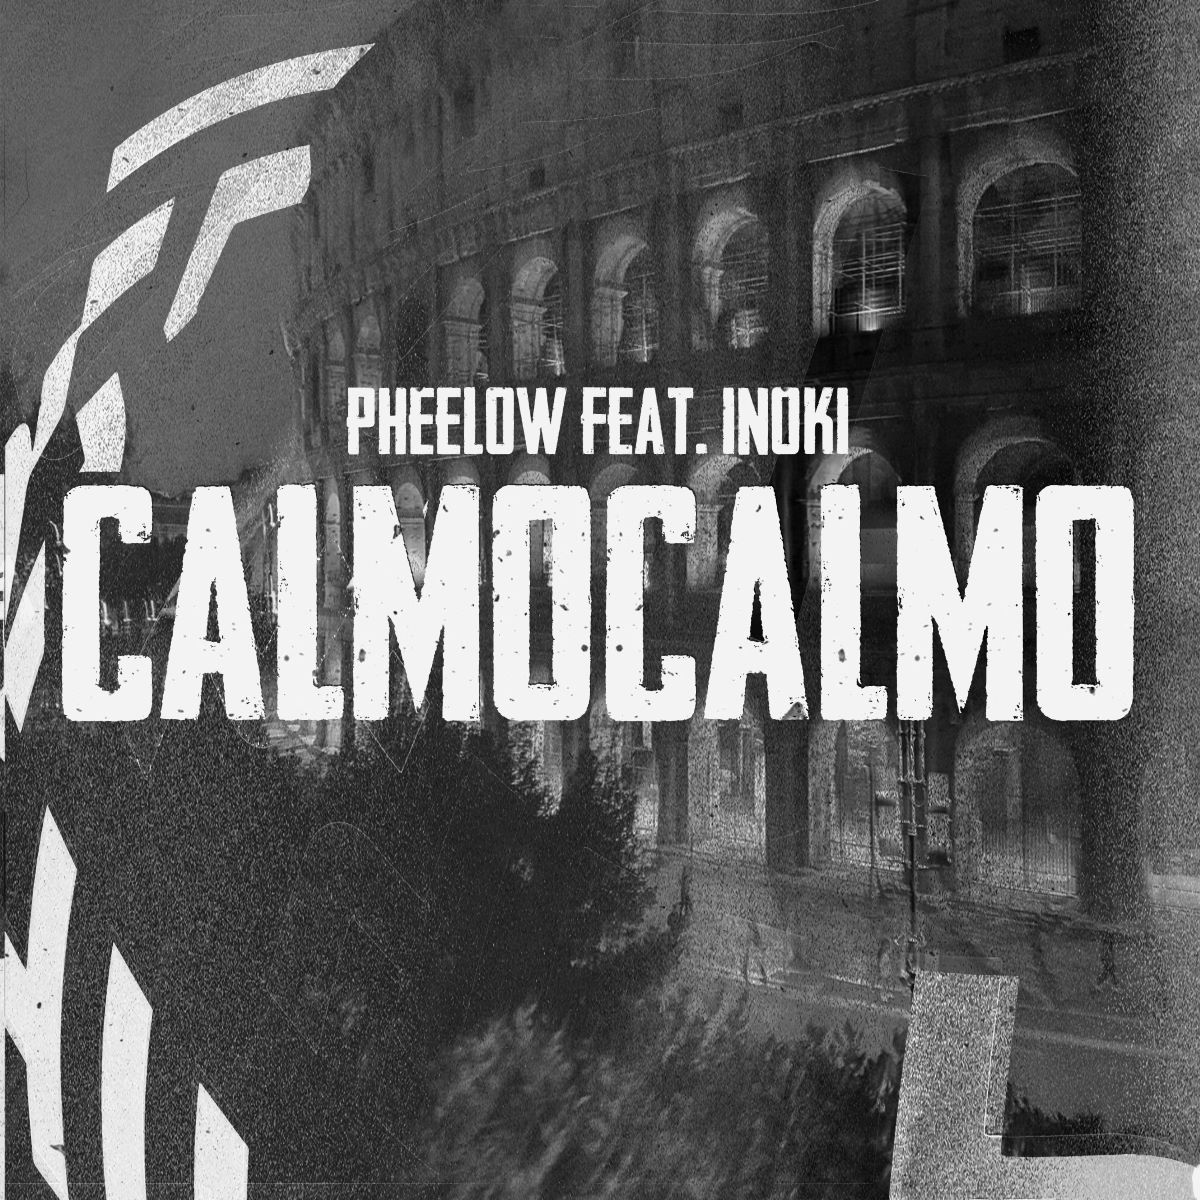 Pheelow feat. Inoki - “CalmoCalmo”